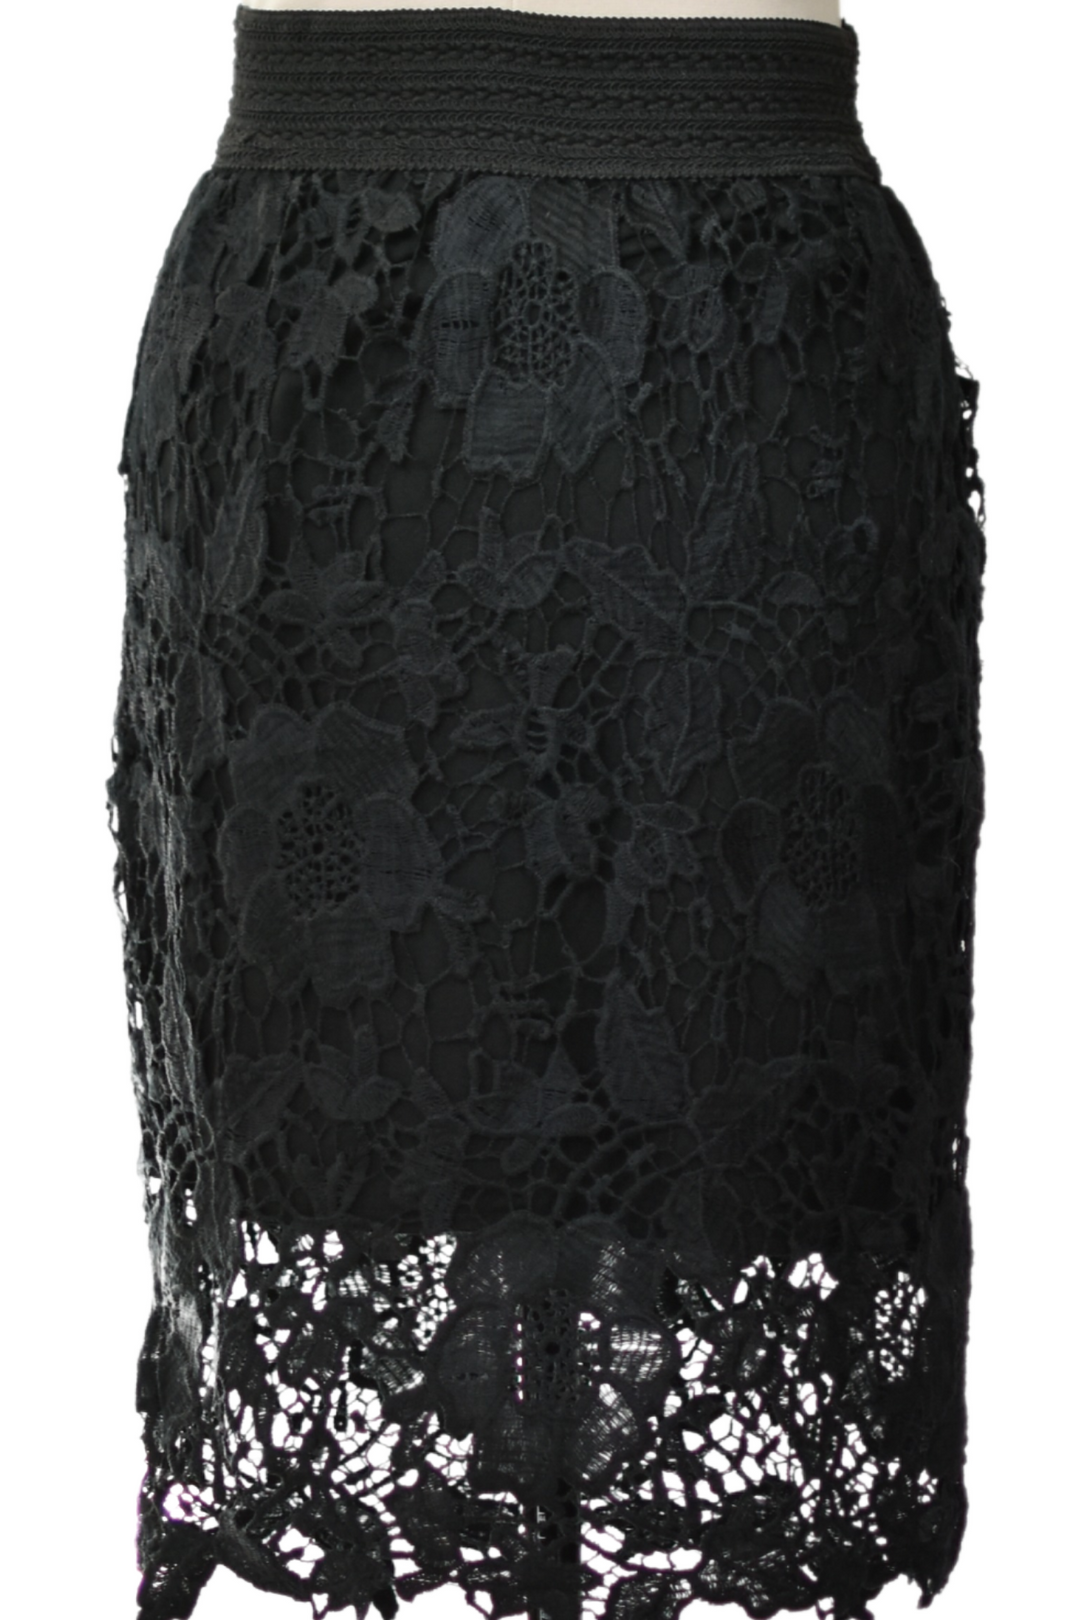 Black Floral Pencil Skirt